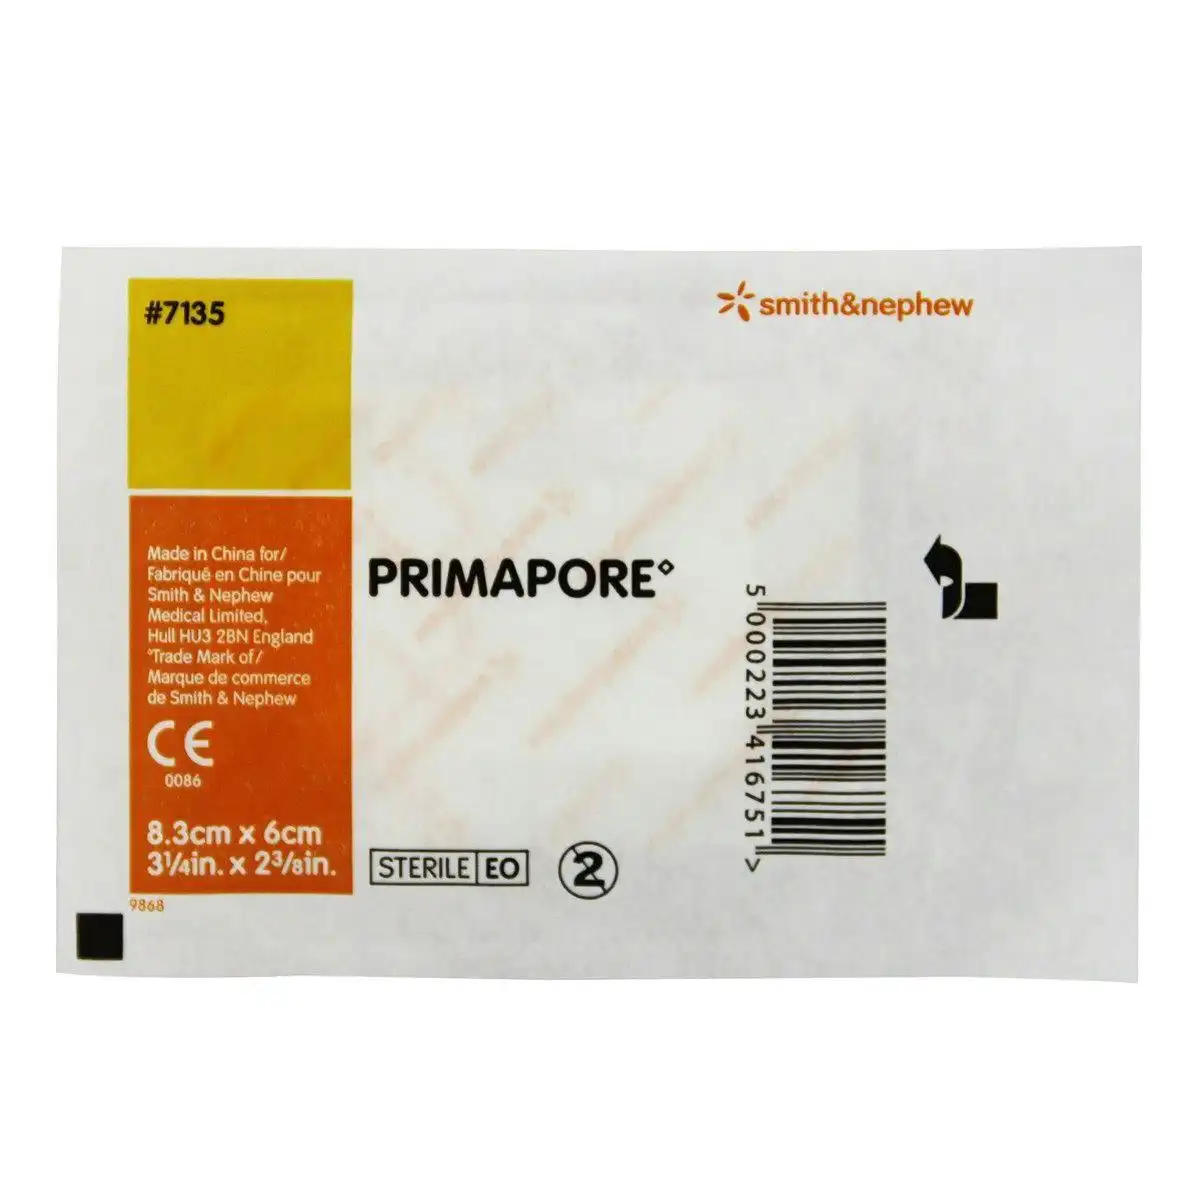 Primapore Dressing 8.3cm x 6cm - Single Dressing (1 Pack)